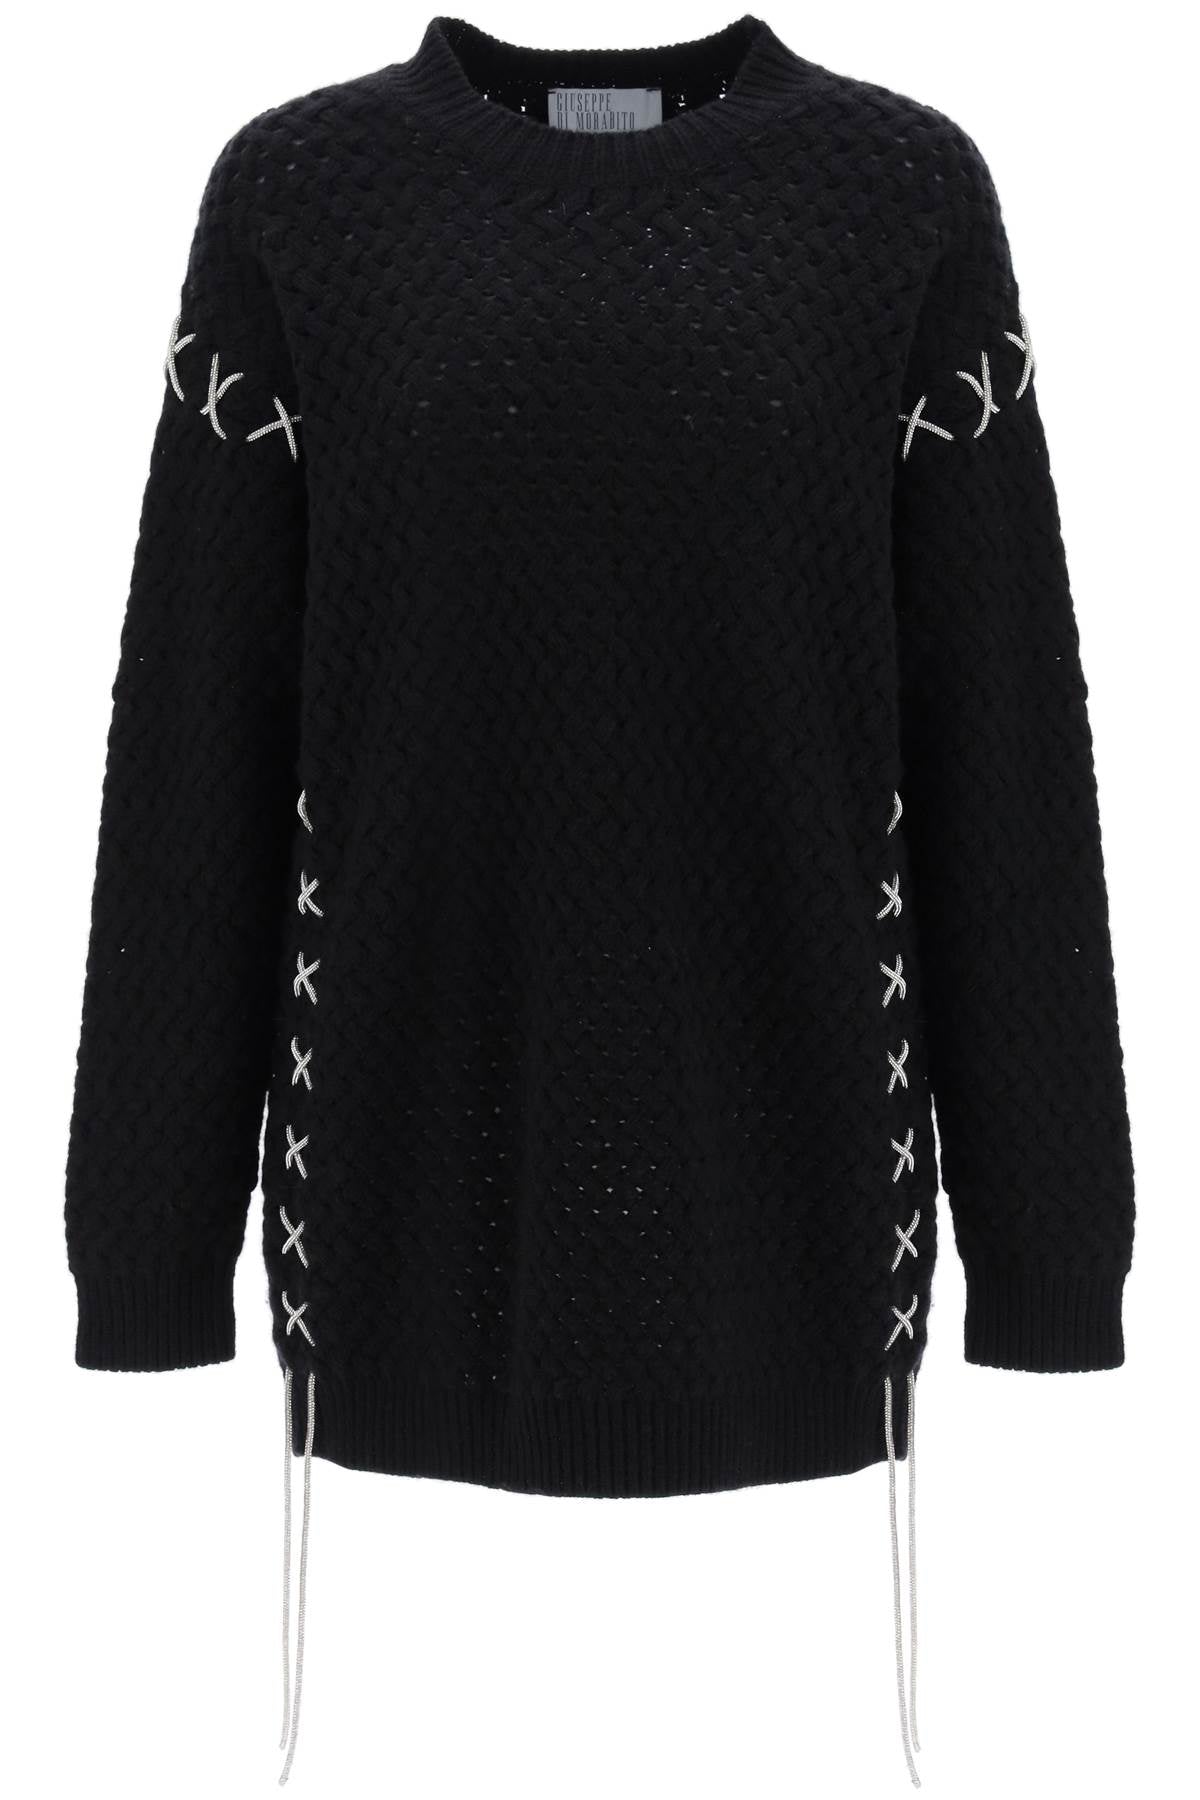 Giuseppe di morabito knitted mini dress with rhinestone-studded tubular 250KN264 BLACK